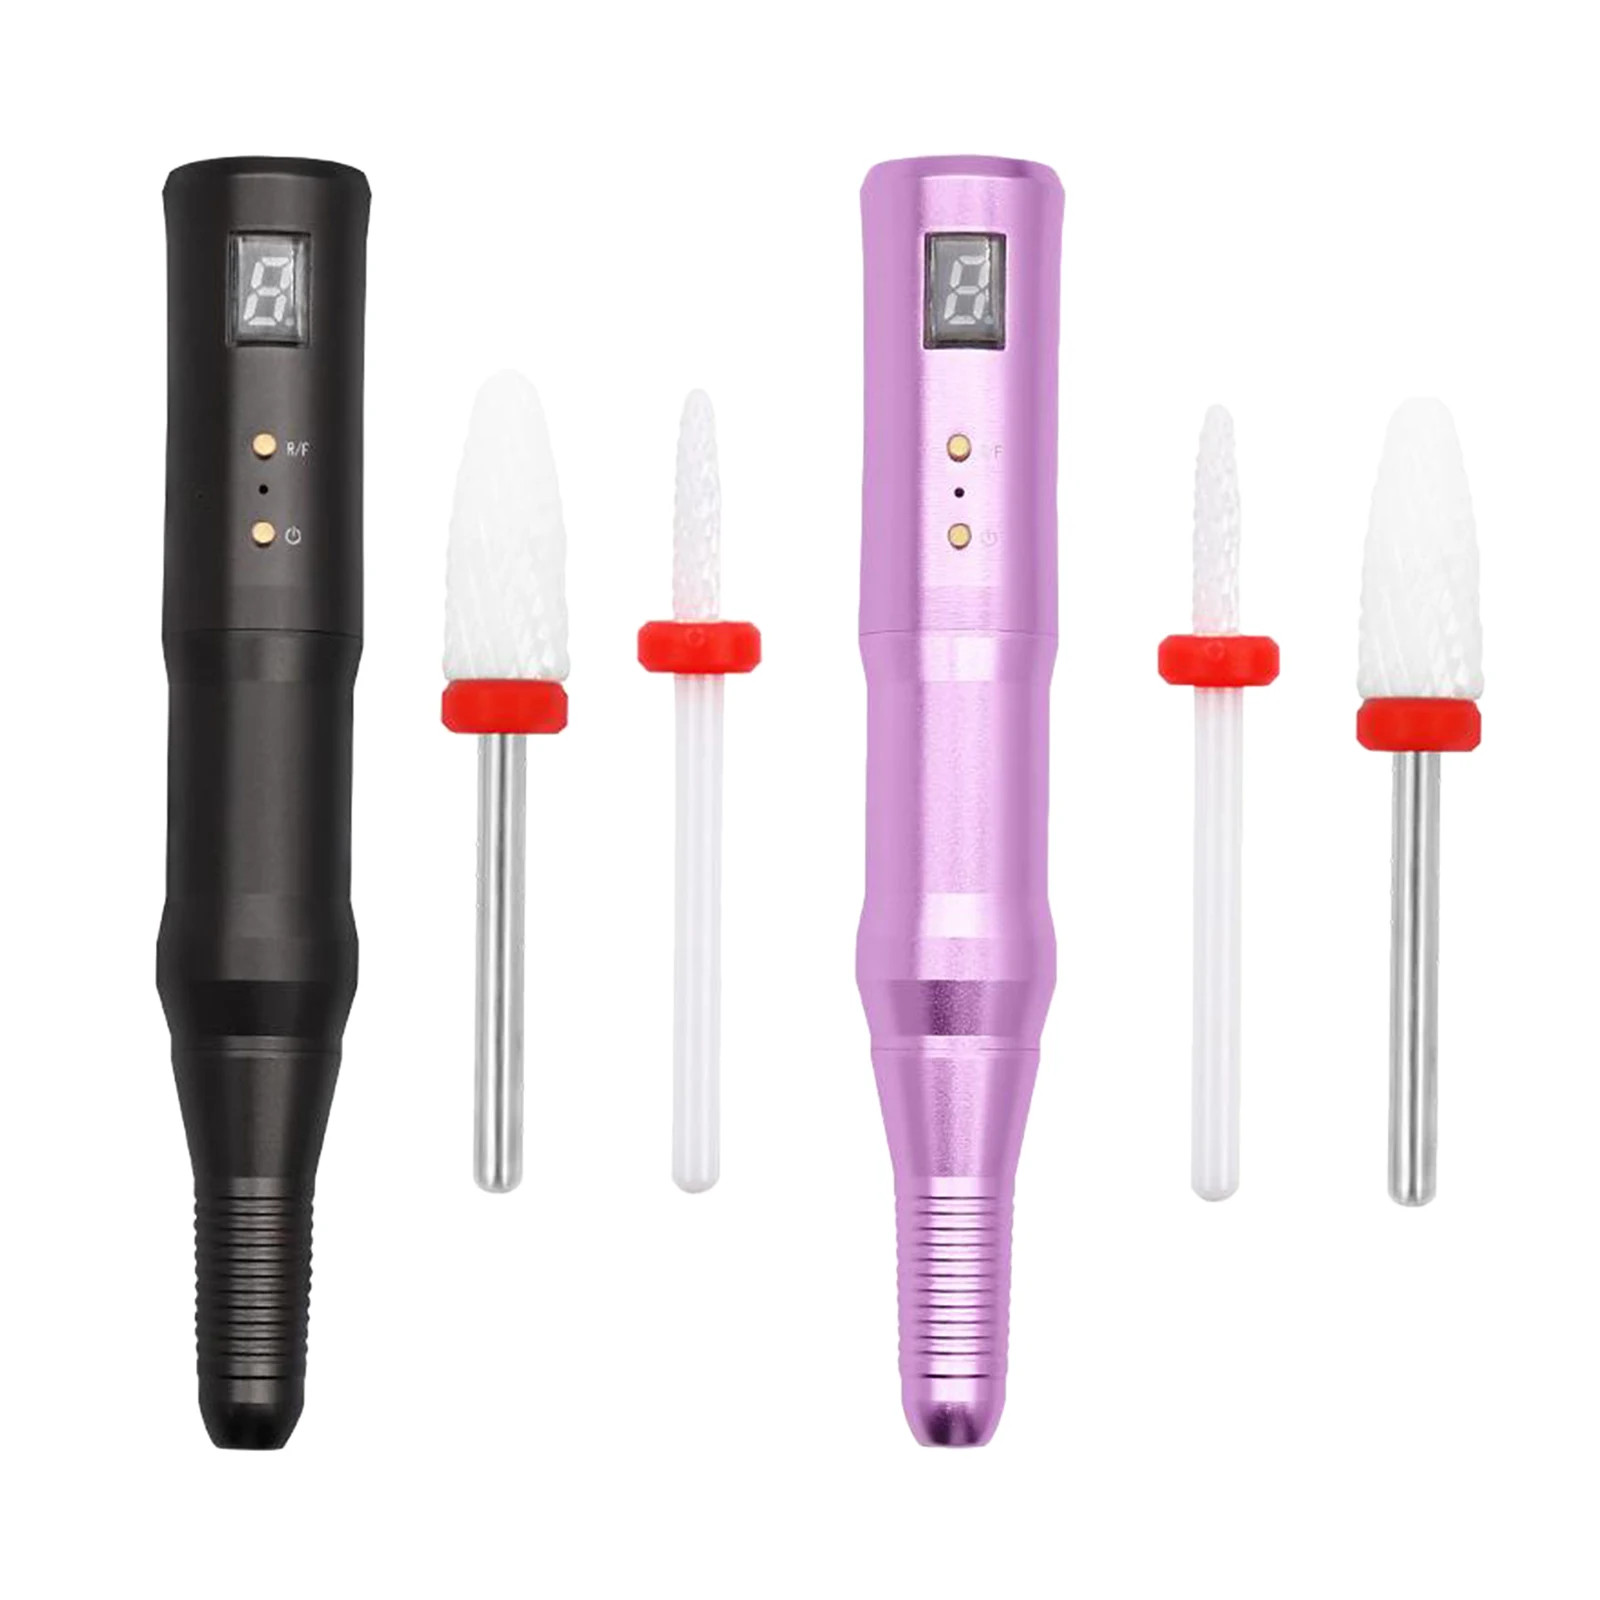 Portable Electric Nail Drill Set USB Manicure Pedicure Pen Polisher